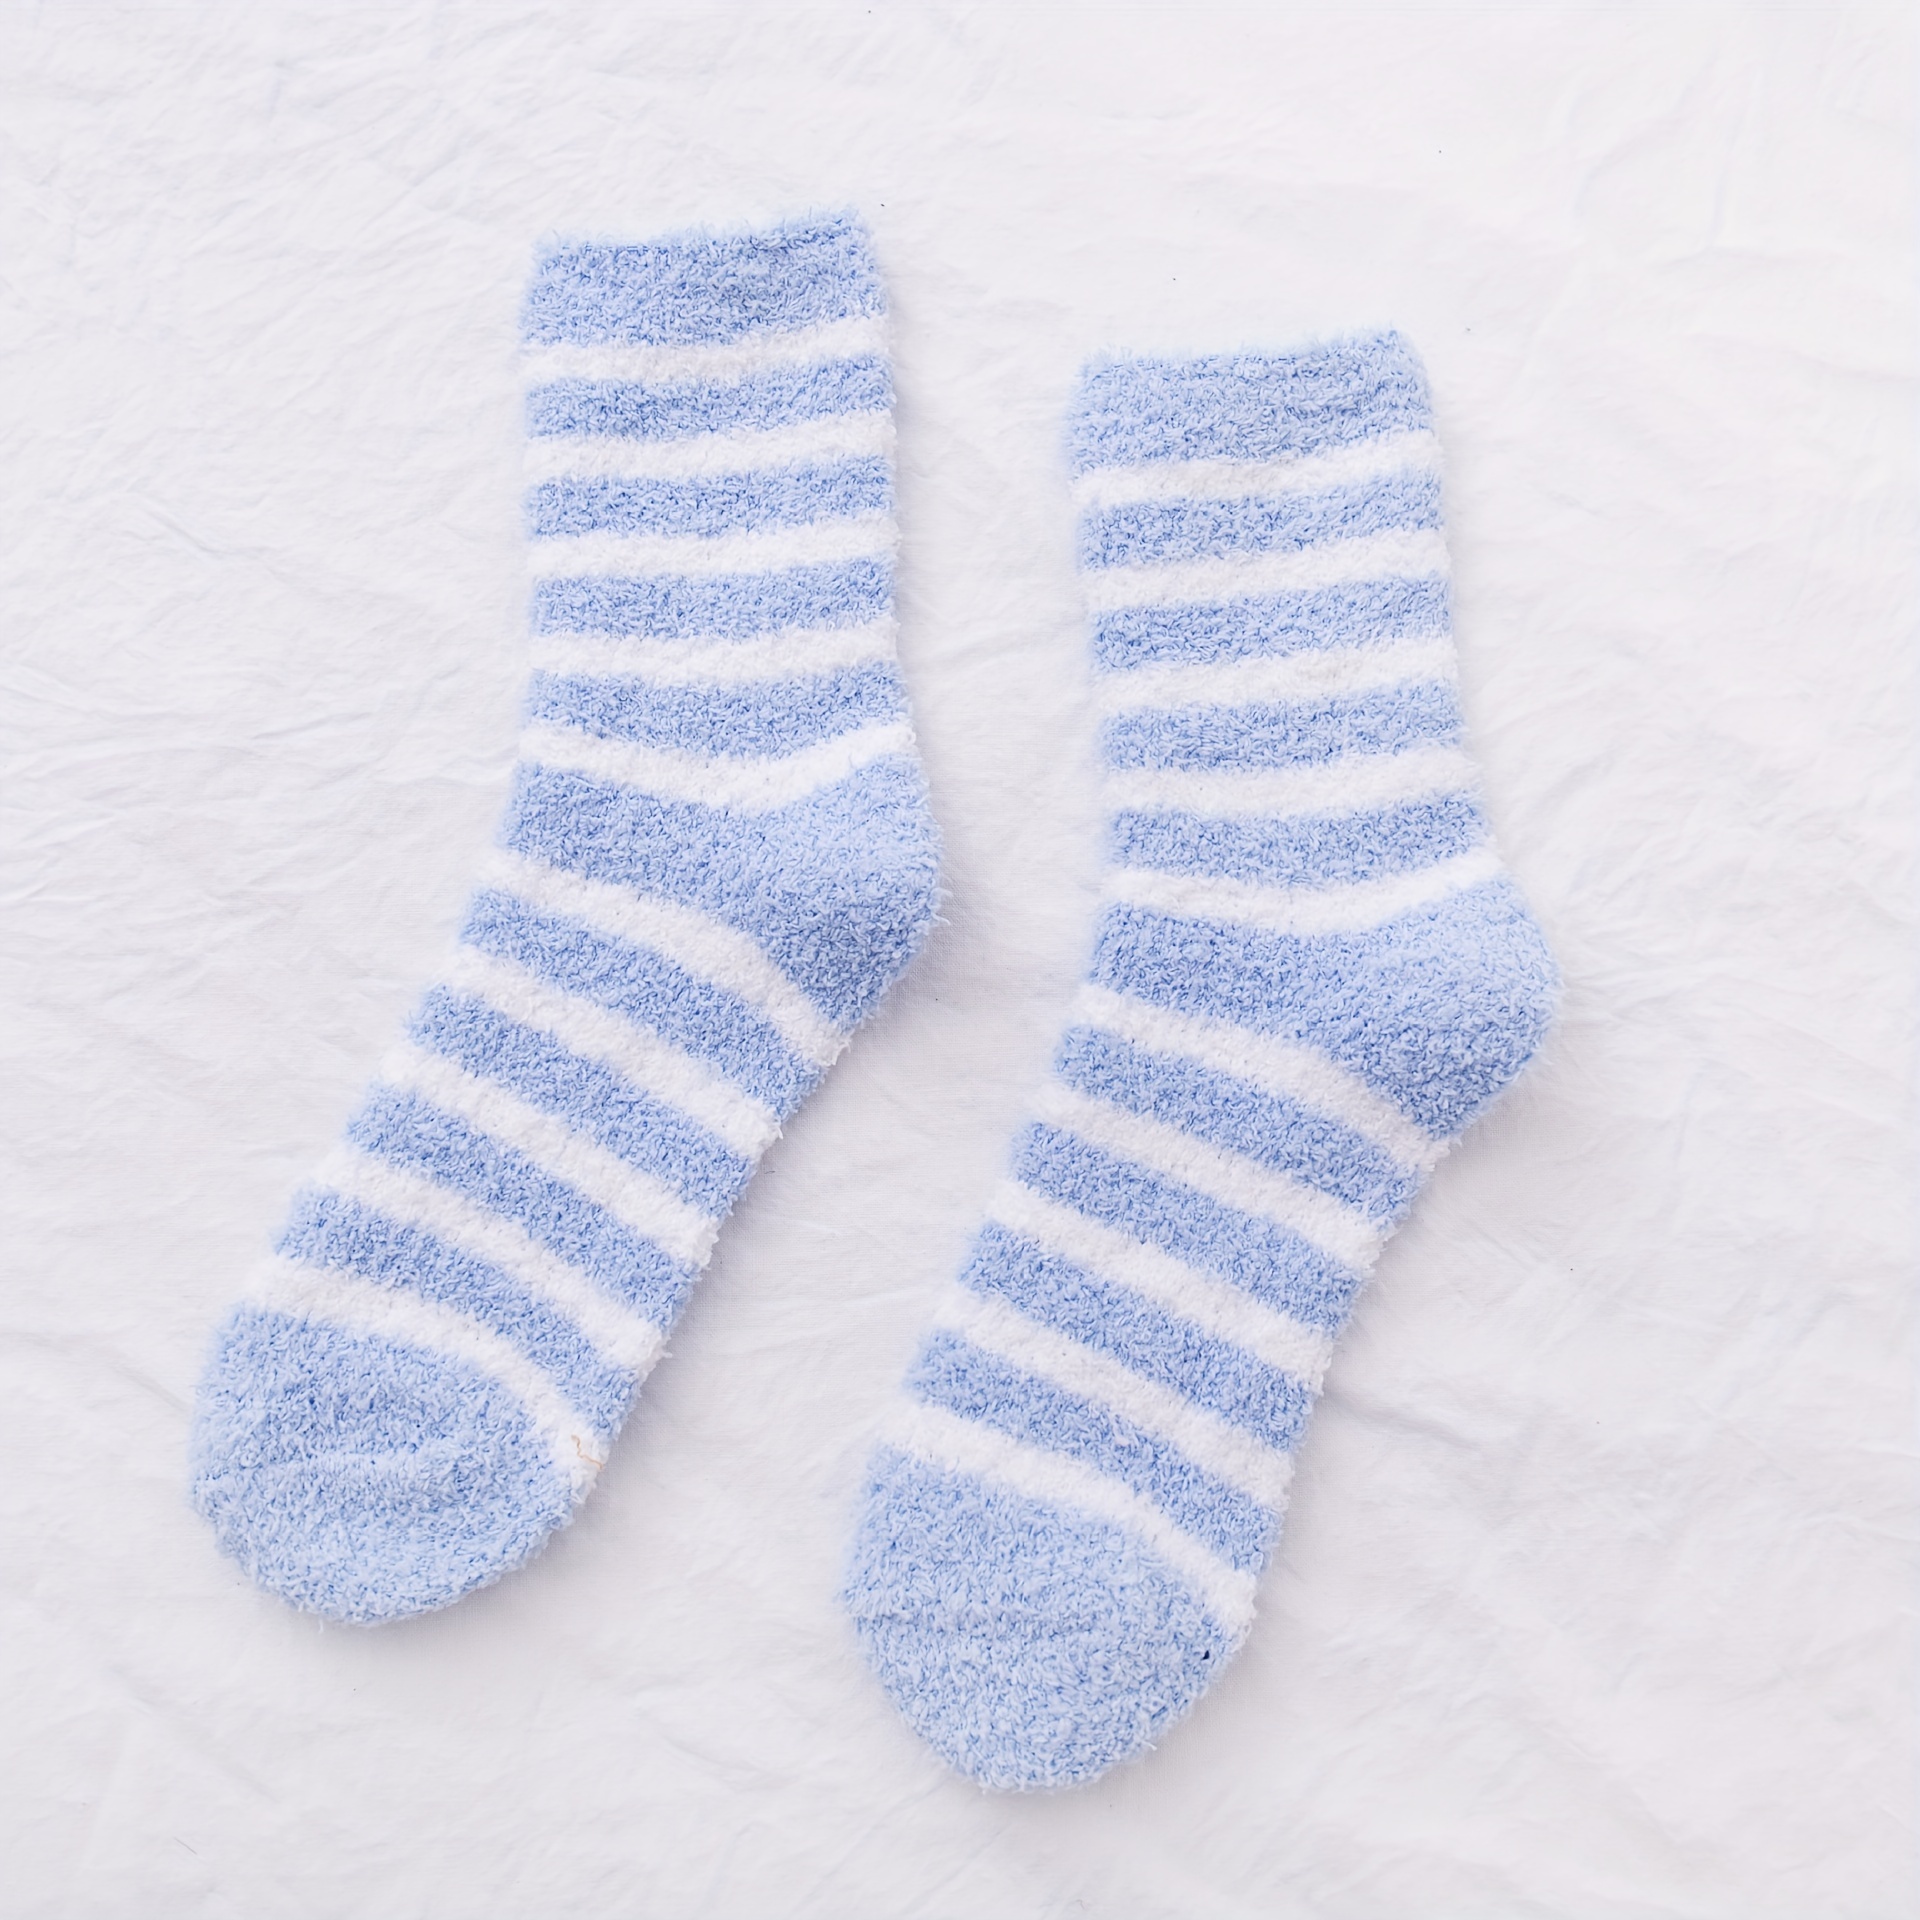 2 pairs striped fuzzy socks warm soft home floor socks womens stockings hosiery